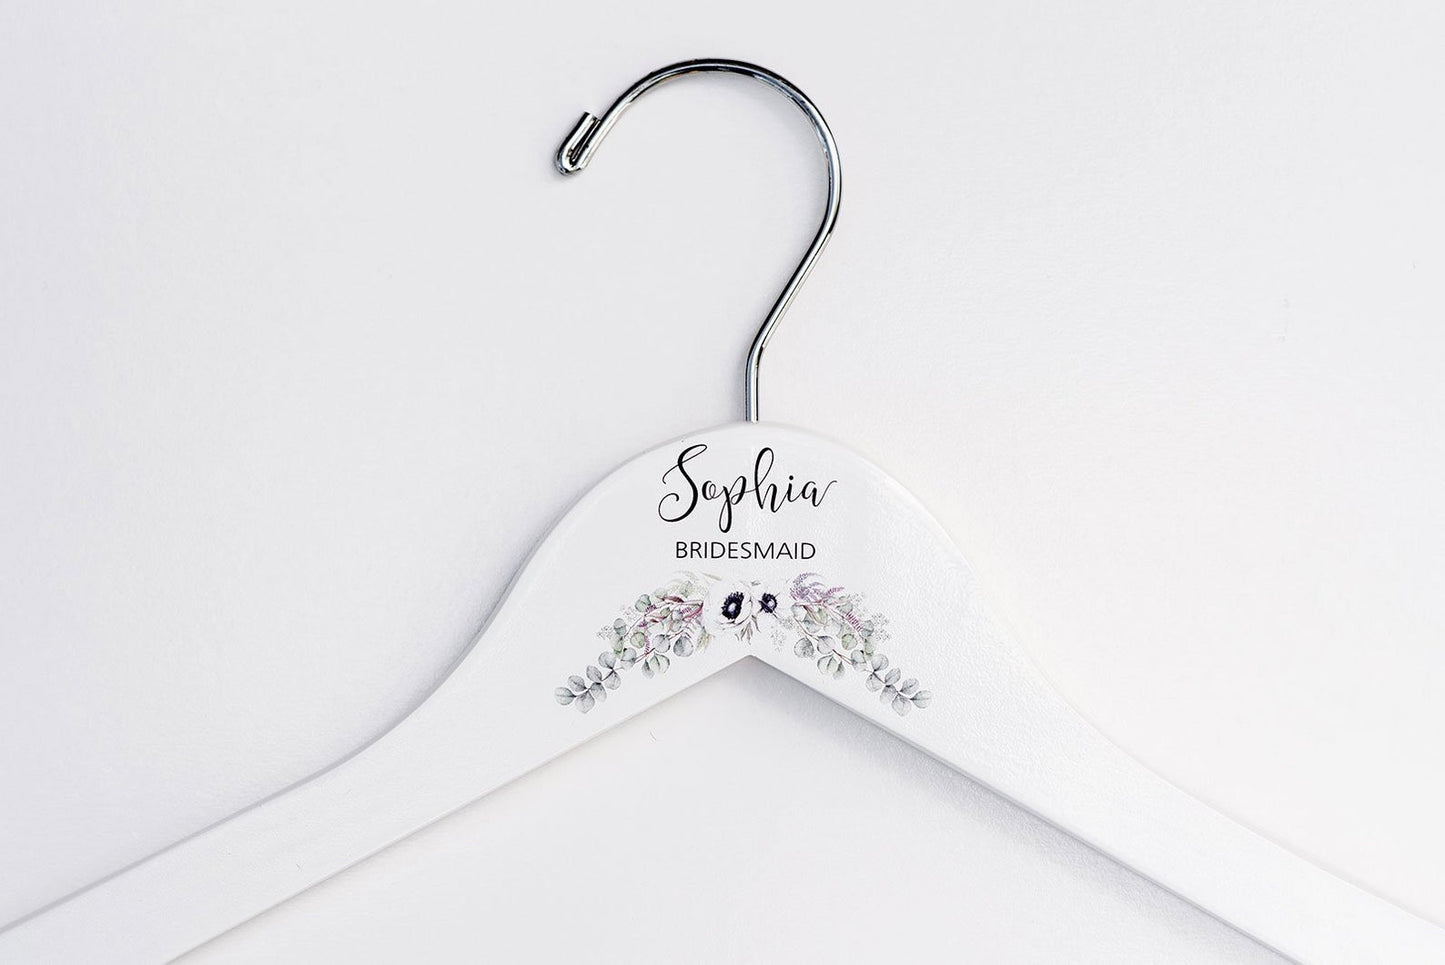 White Bridesmaid Printed Hanger with cream floral design